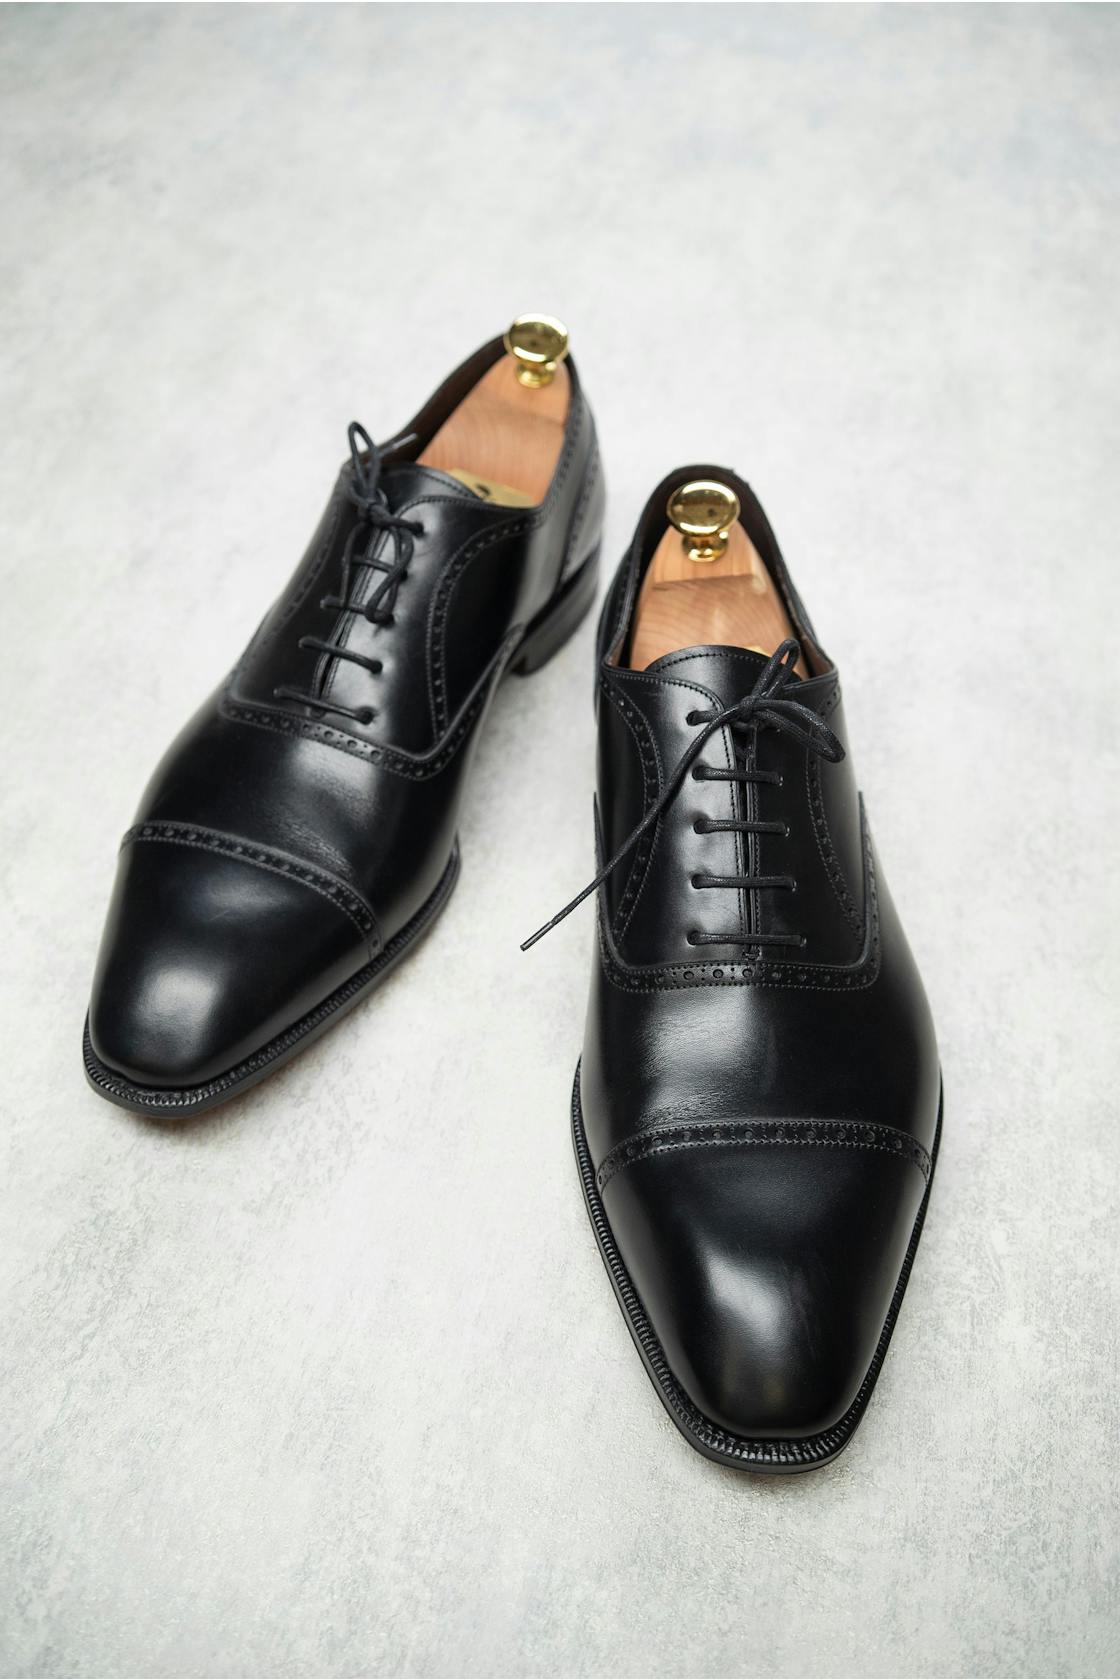 Carmina Simpson 80105 Black Calf Oxford Punched Captoe Shoes